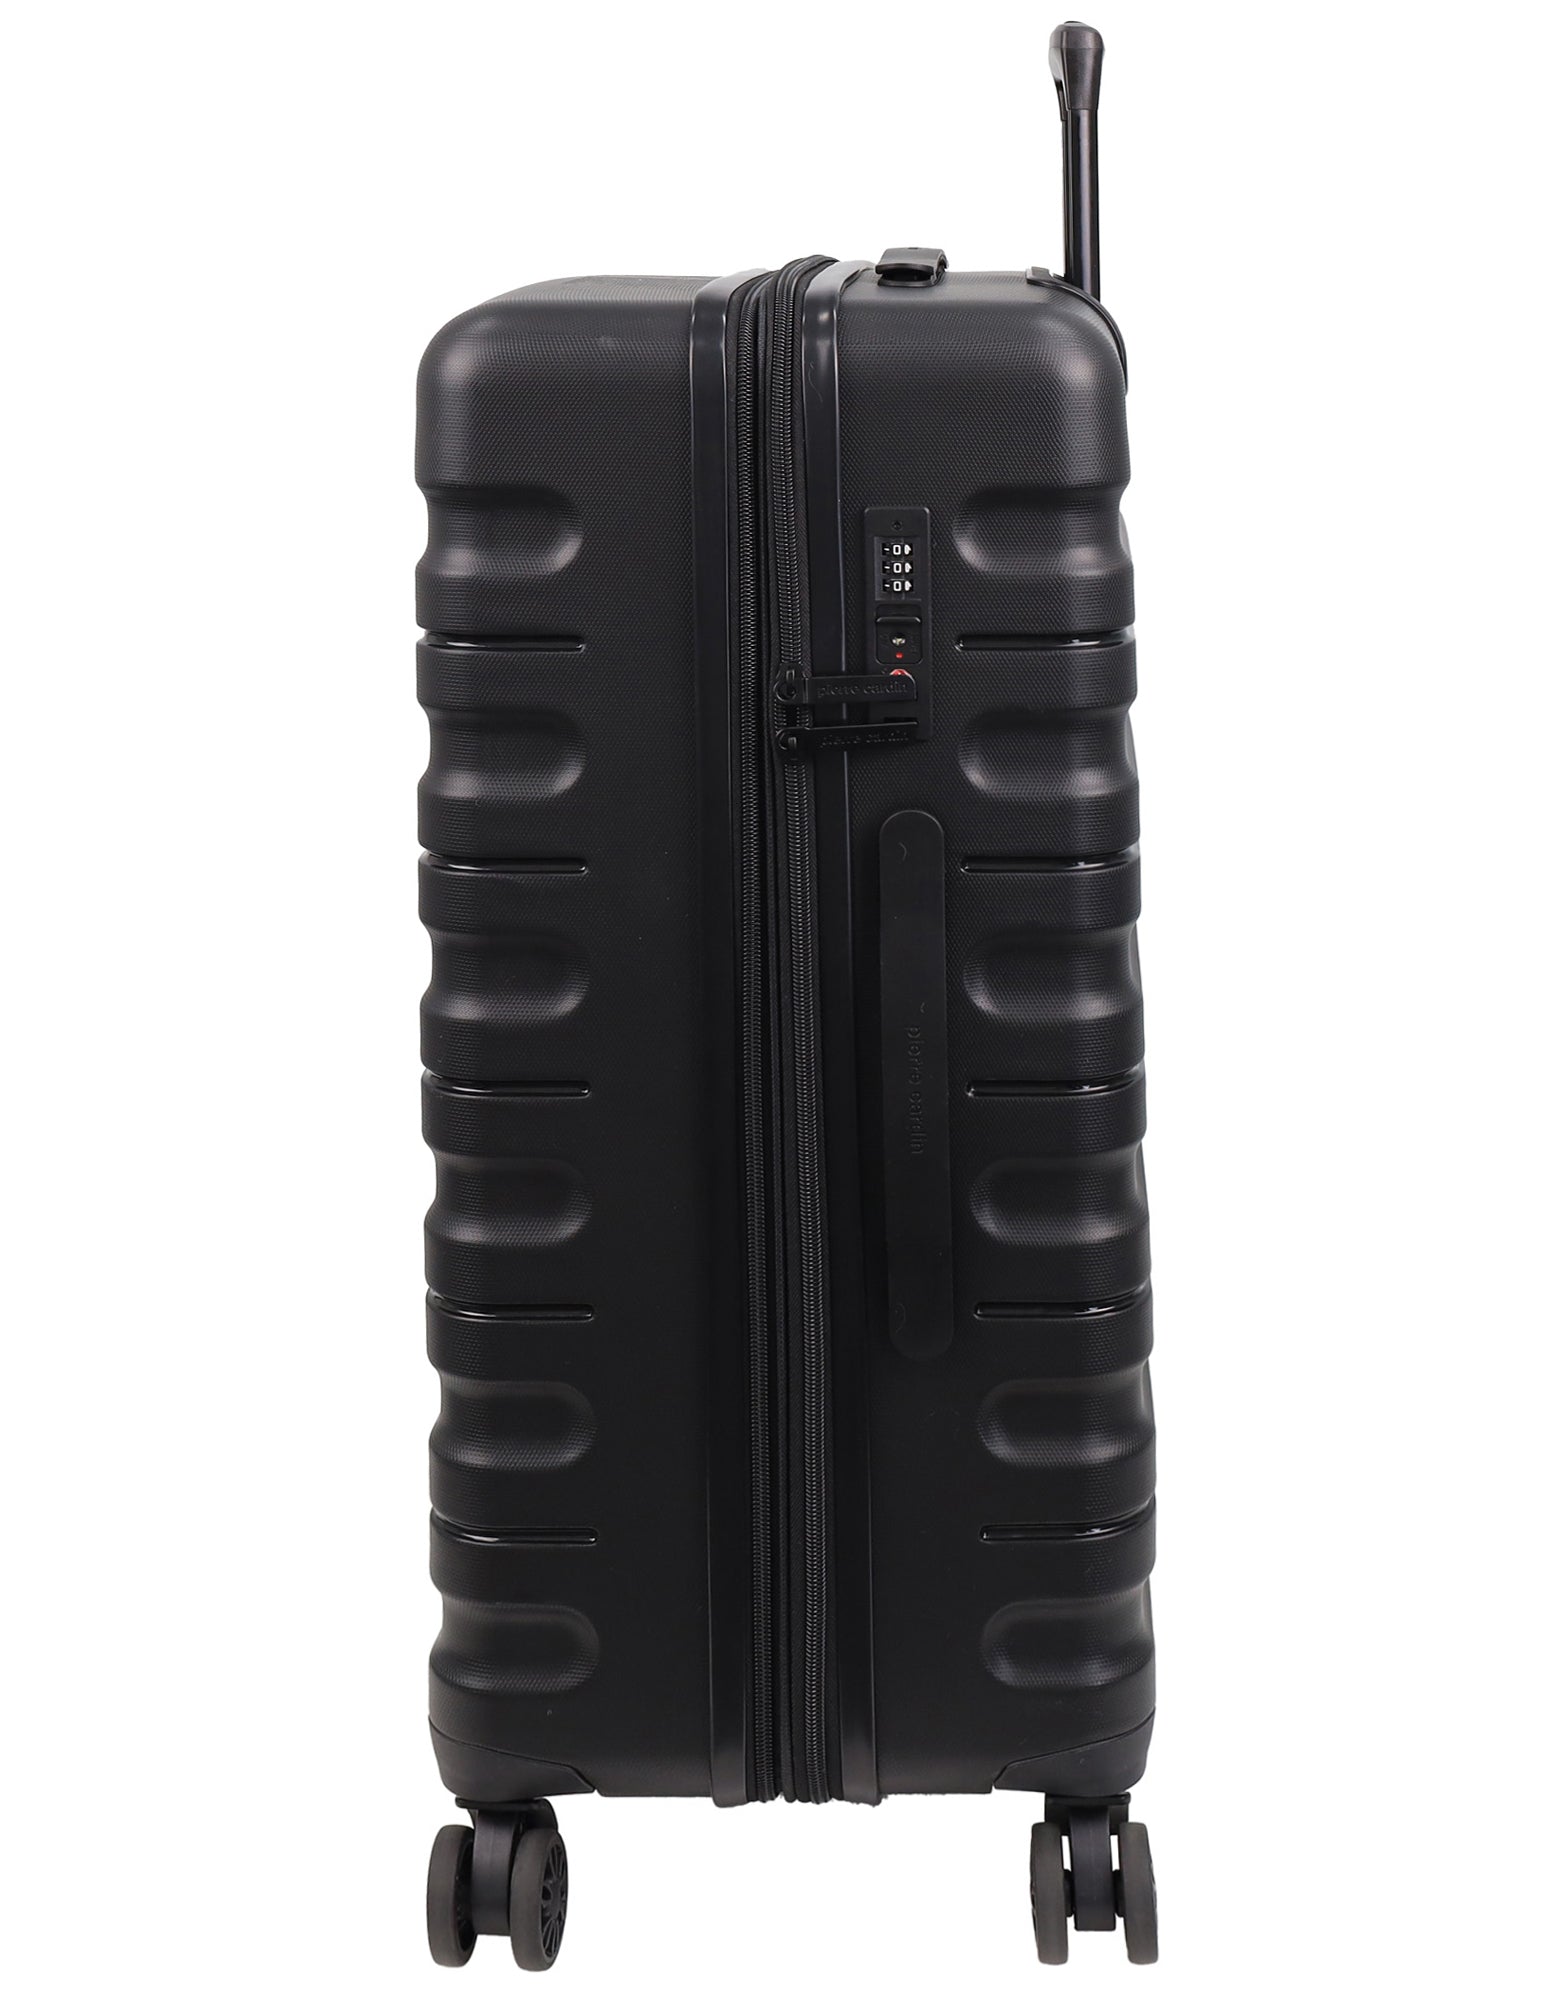 Pierre Cardin 80cm LARGE Hard Shell Suitcase in Black